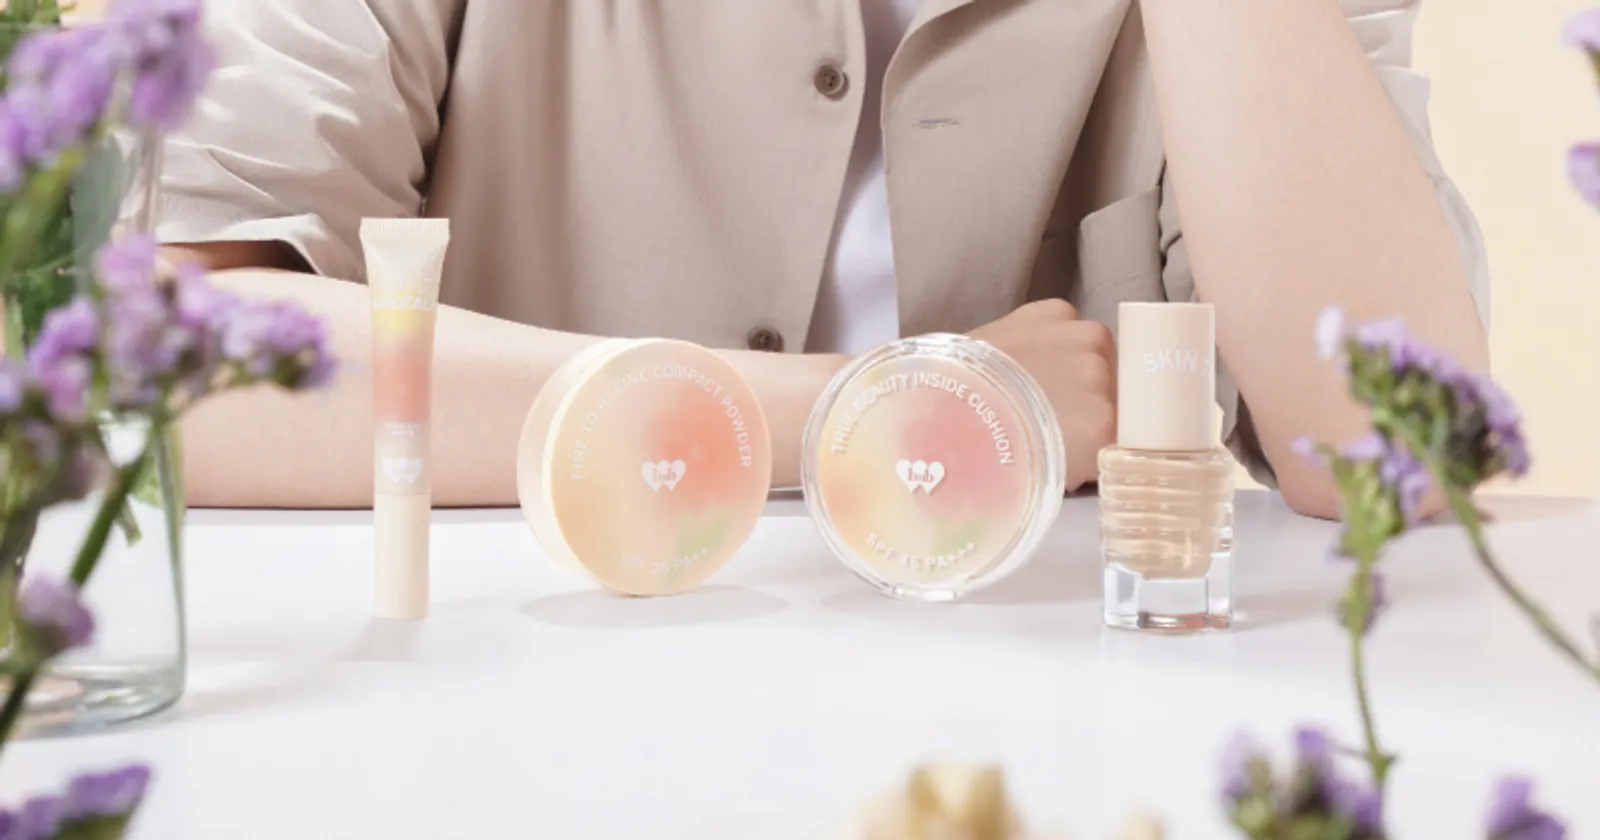 Shade Baru Lip Tint & Compact Powder barenbliss untuk Korean Looks 